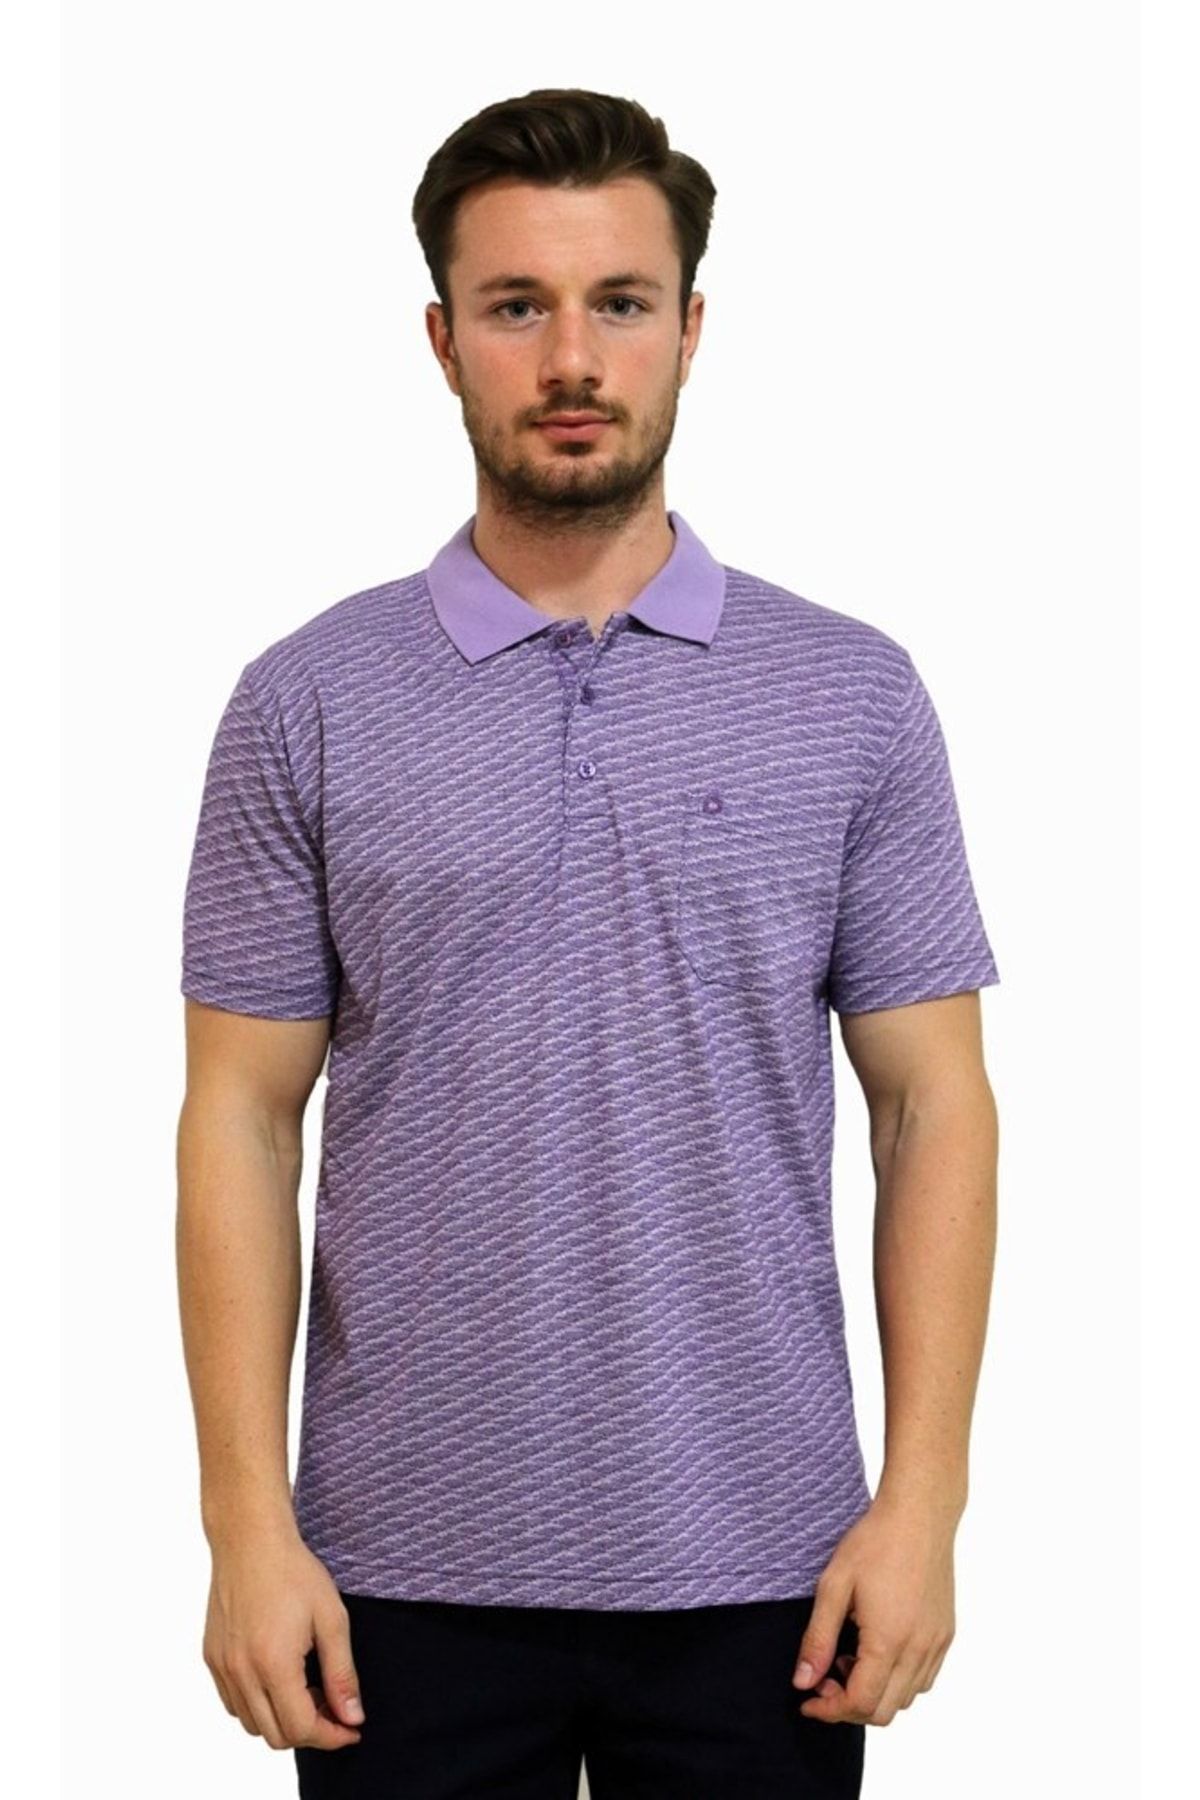 Diandor Erkek T-shirt Mor/purple 2217014